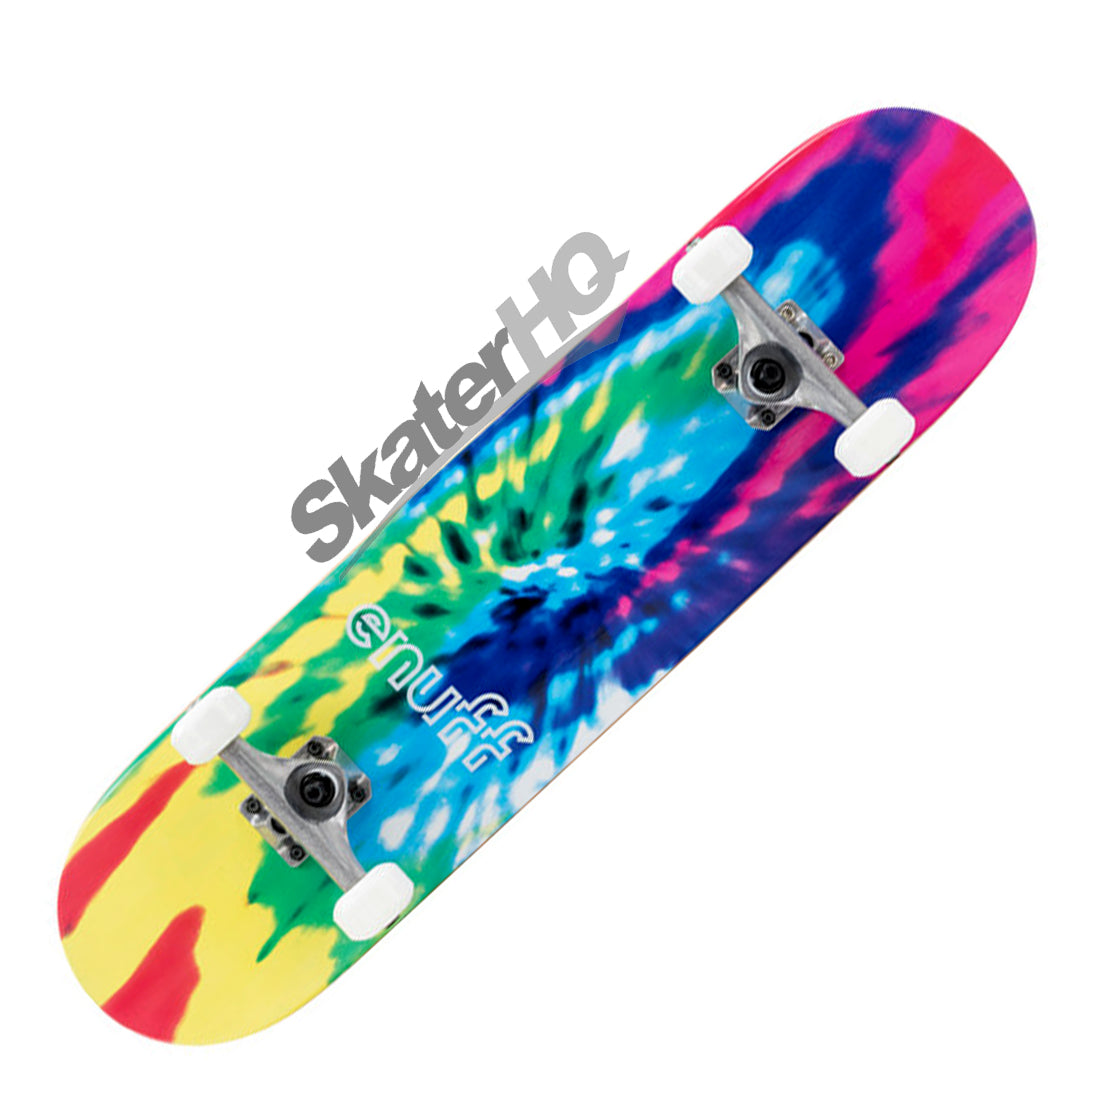 Enuff Tie Dye 7.75 Complete - Multicolour Skateboard Completes Modern Street